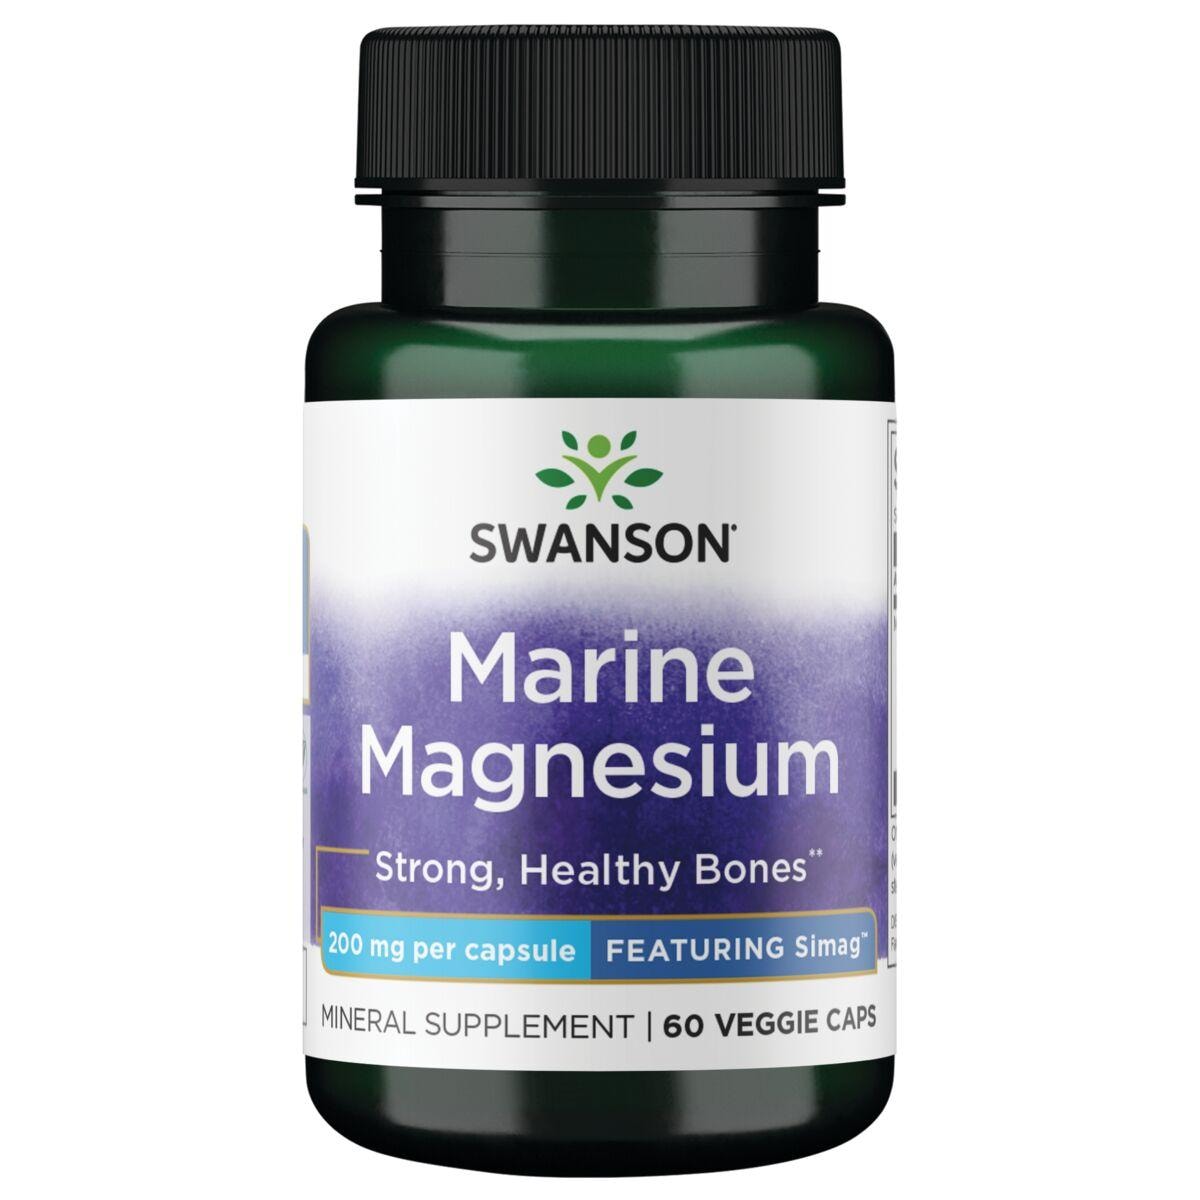 Swanson Ultra Marine Magnesium - Featuring Simag Vitamin | 200 mg | 60 Veg Caps